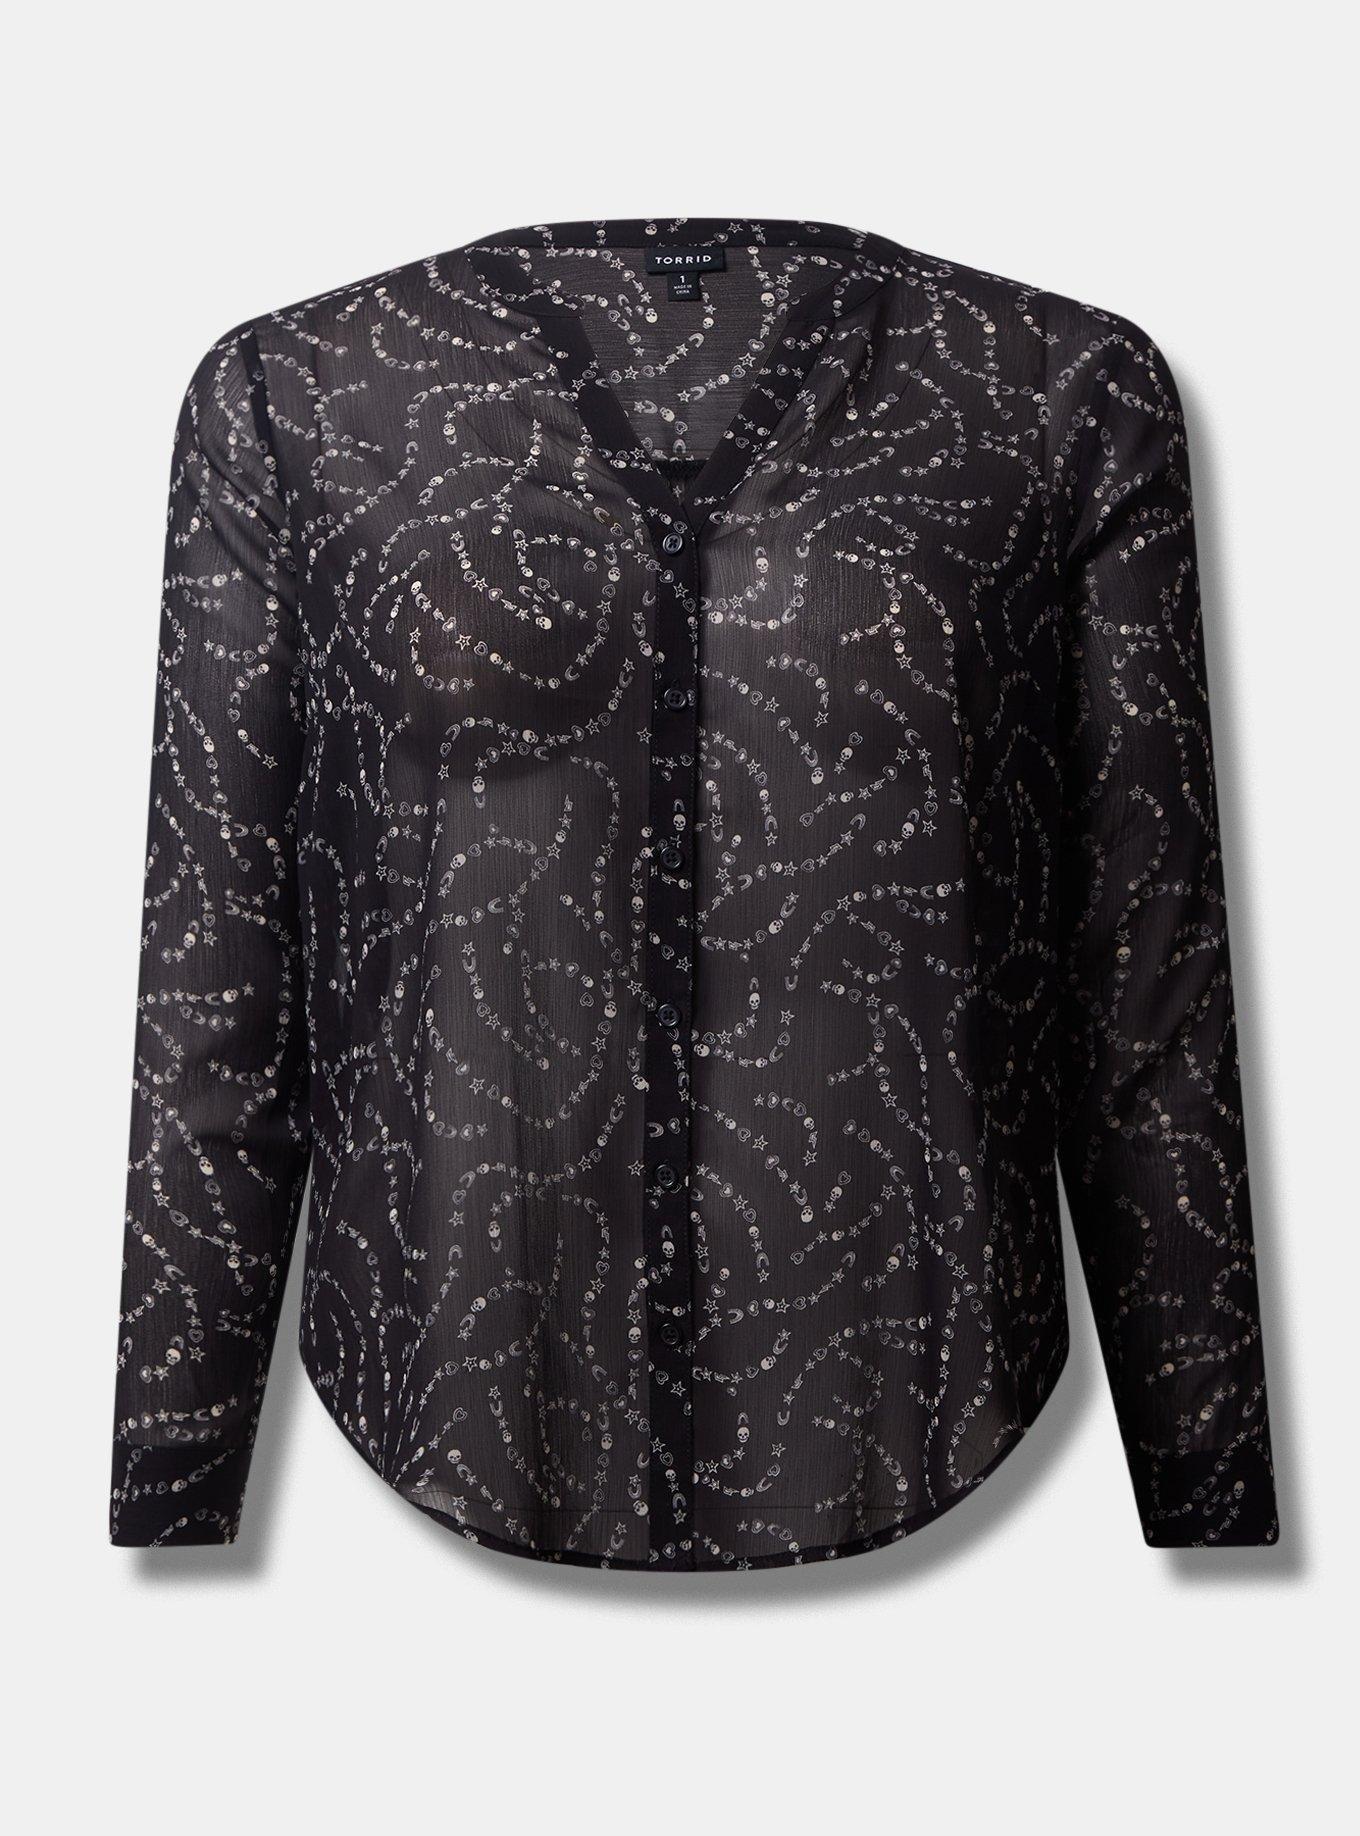 Torrid Gorgeous Black Chiffon Sleeve Super Soft Blouse Top Plus Size 3X,  22/24 